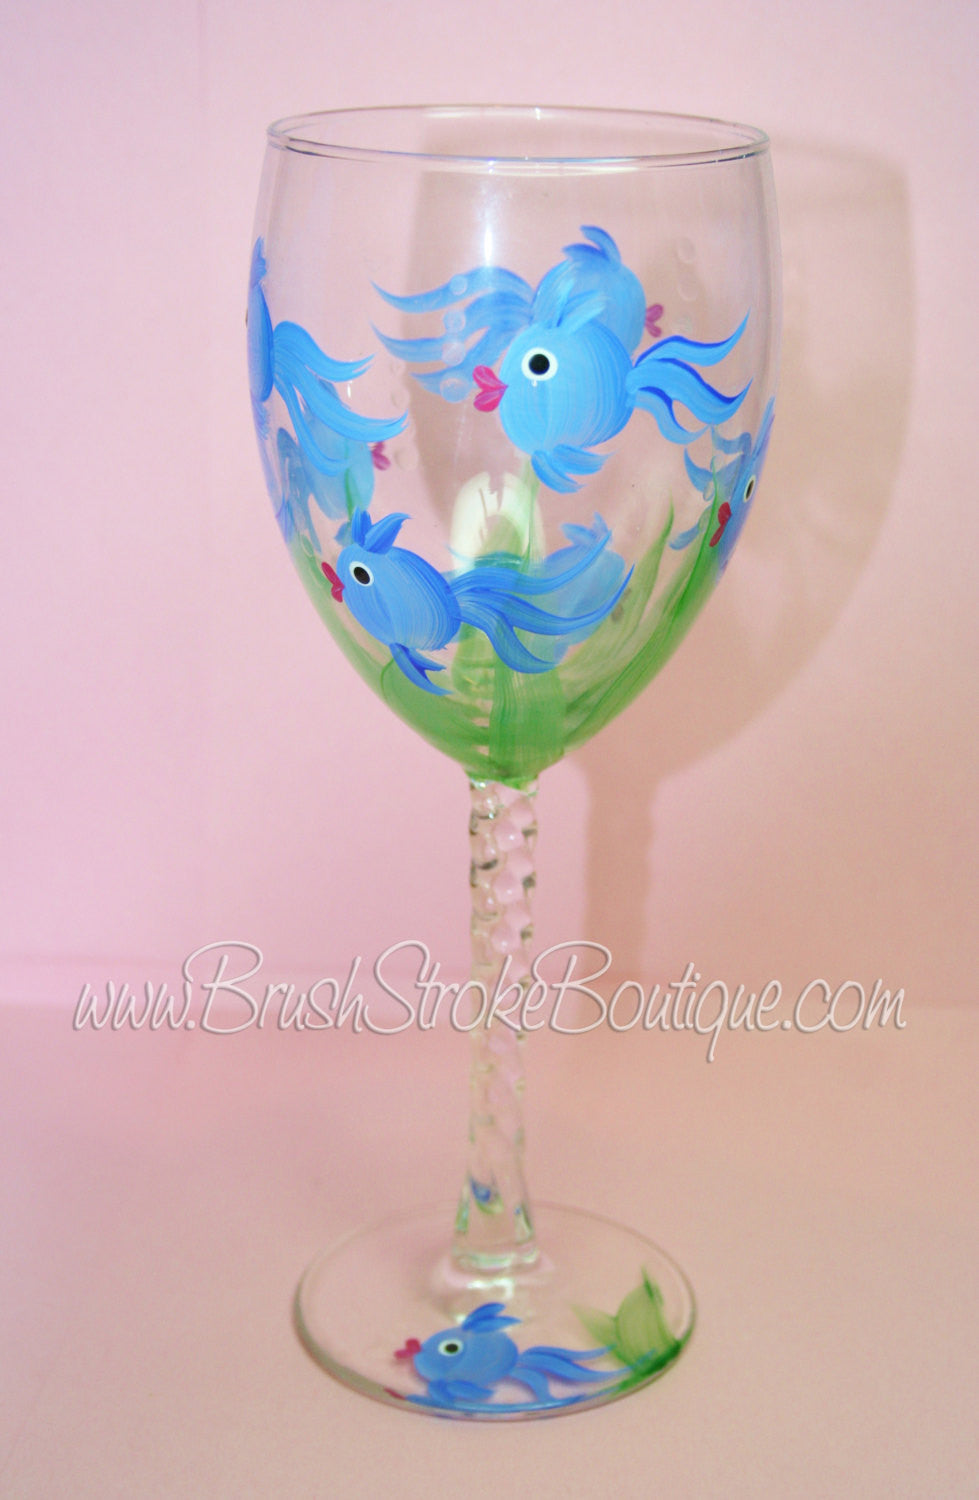 Hand Painted Wine Glass - Somethings Fishy - Original Designs by Cathy Kraemer